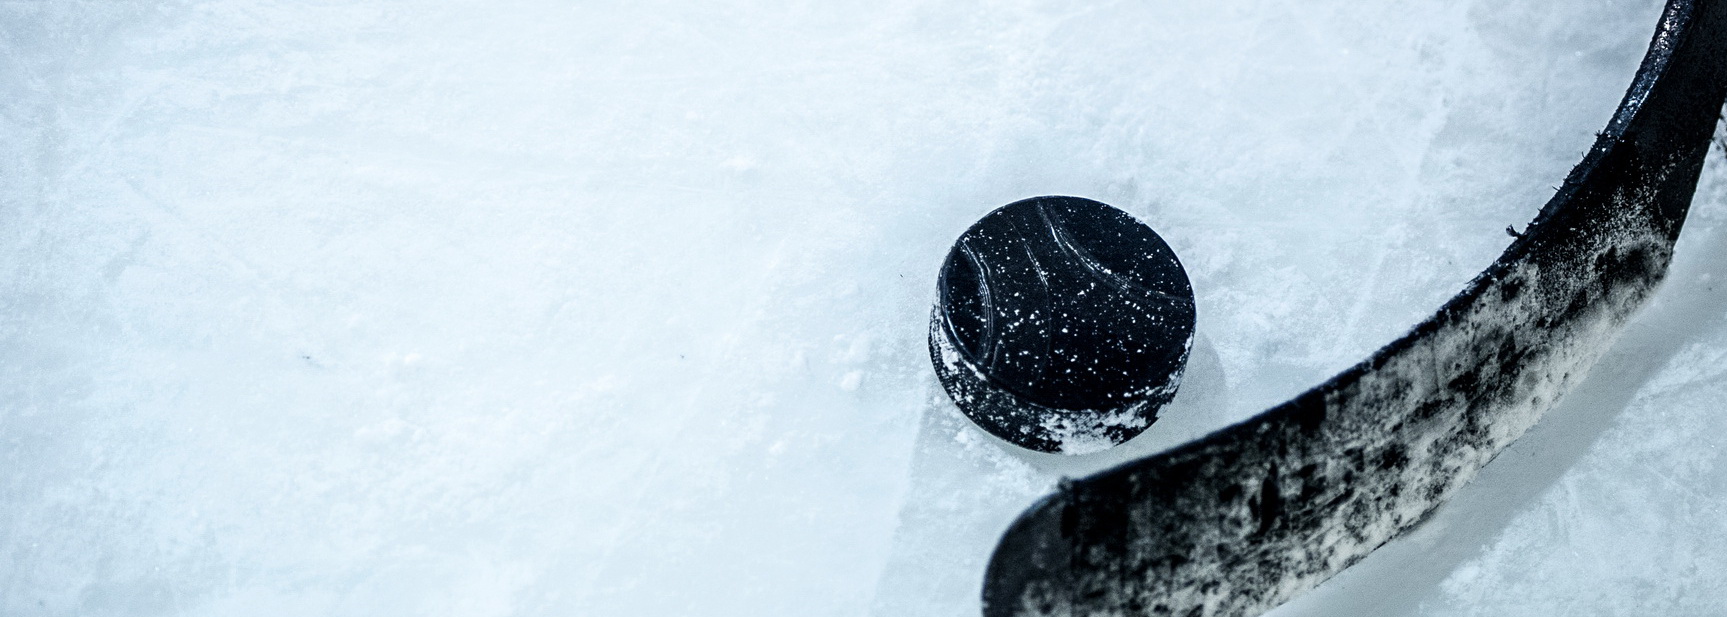 Juniorka na vod sezony nestaila na svm led na sousedn Beclav.